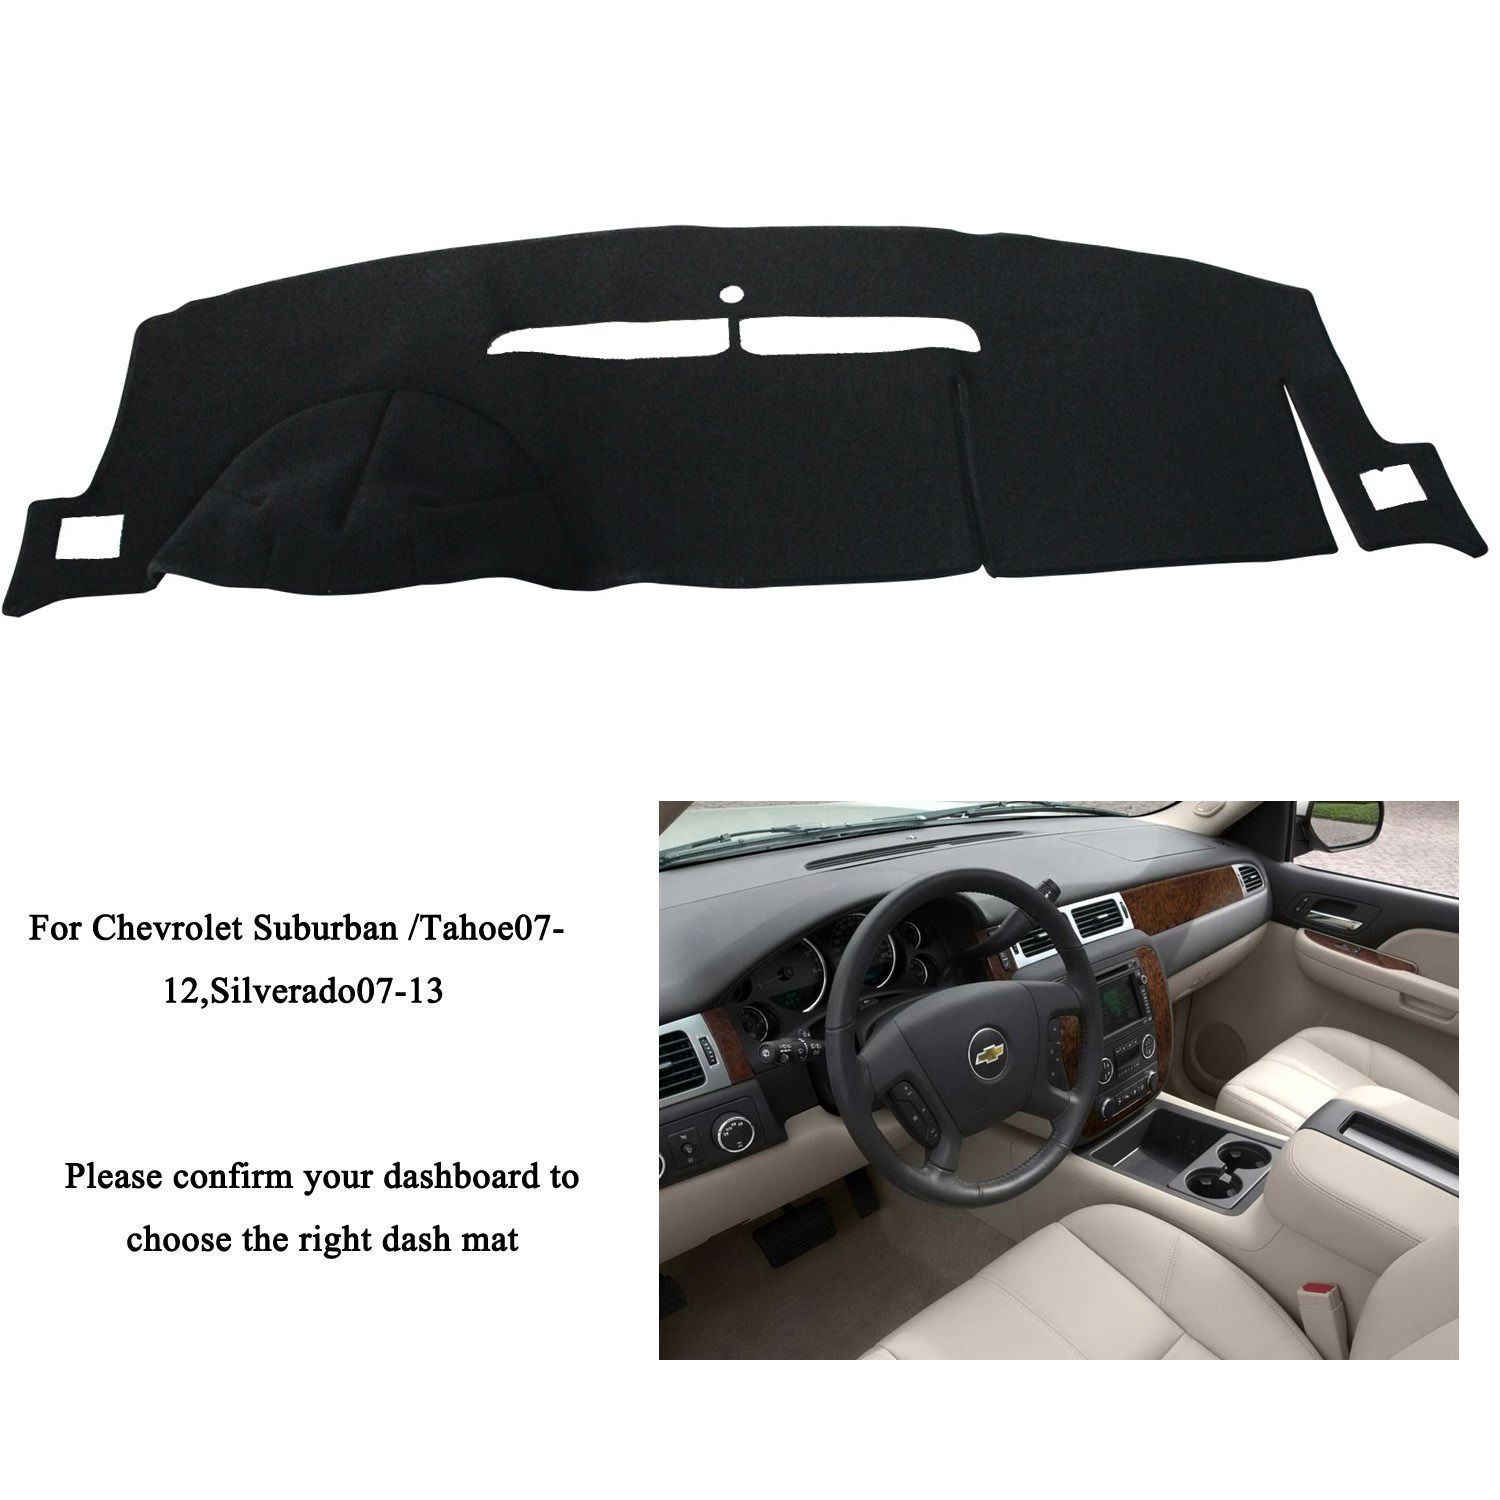 for Chevrolet Suburban/Tahoe 07-12 Silverado Ltz 07-13 Dashmat Dashboard Cover